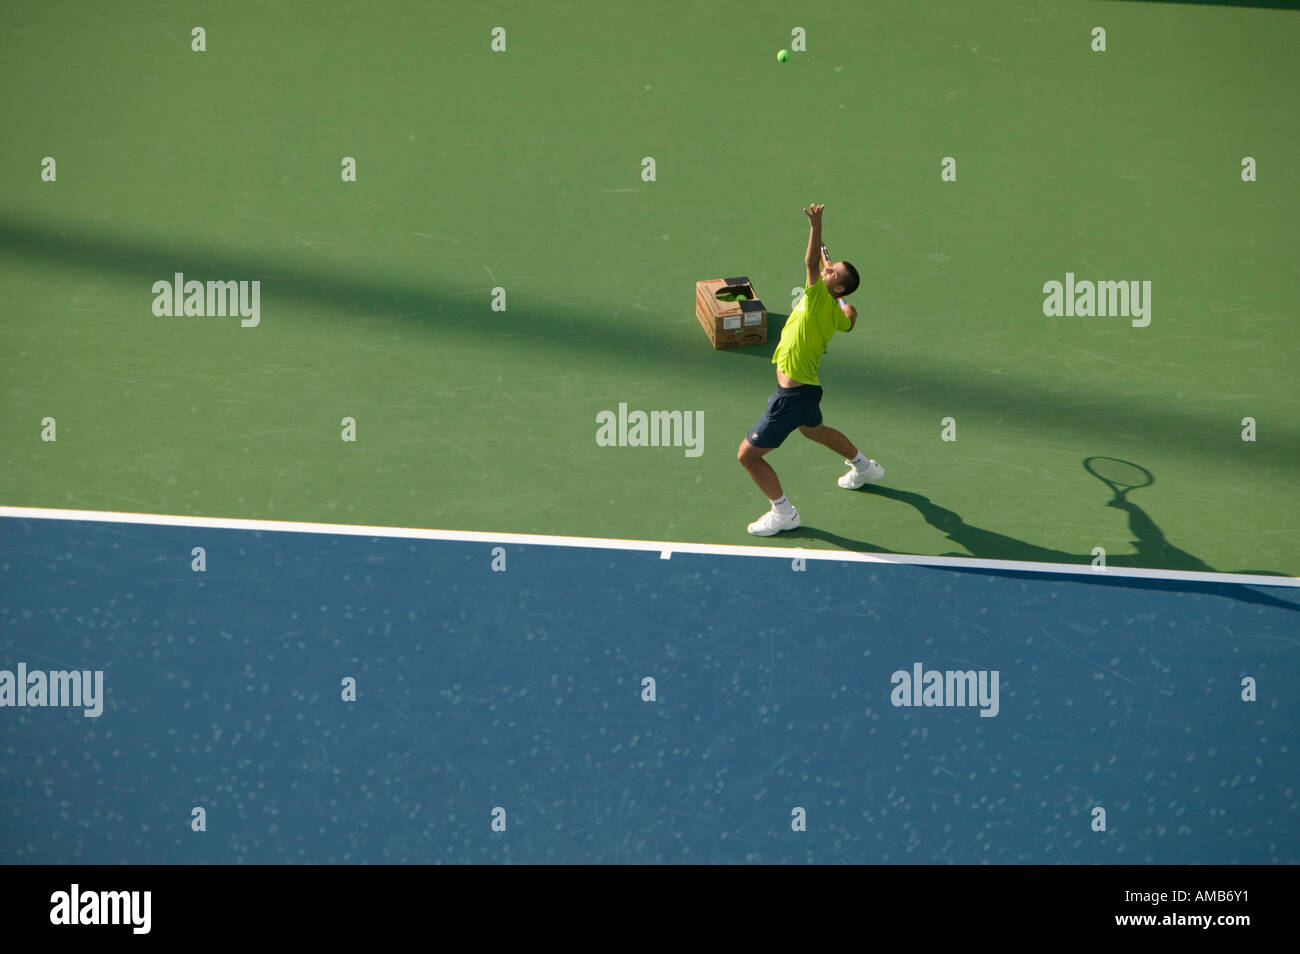 A tennisman serves during a practice game Stock Photo